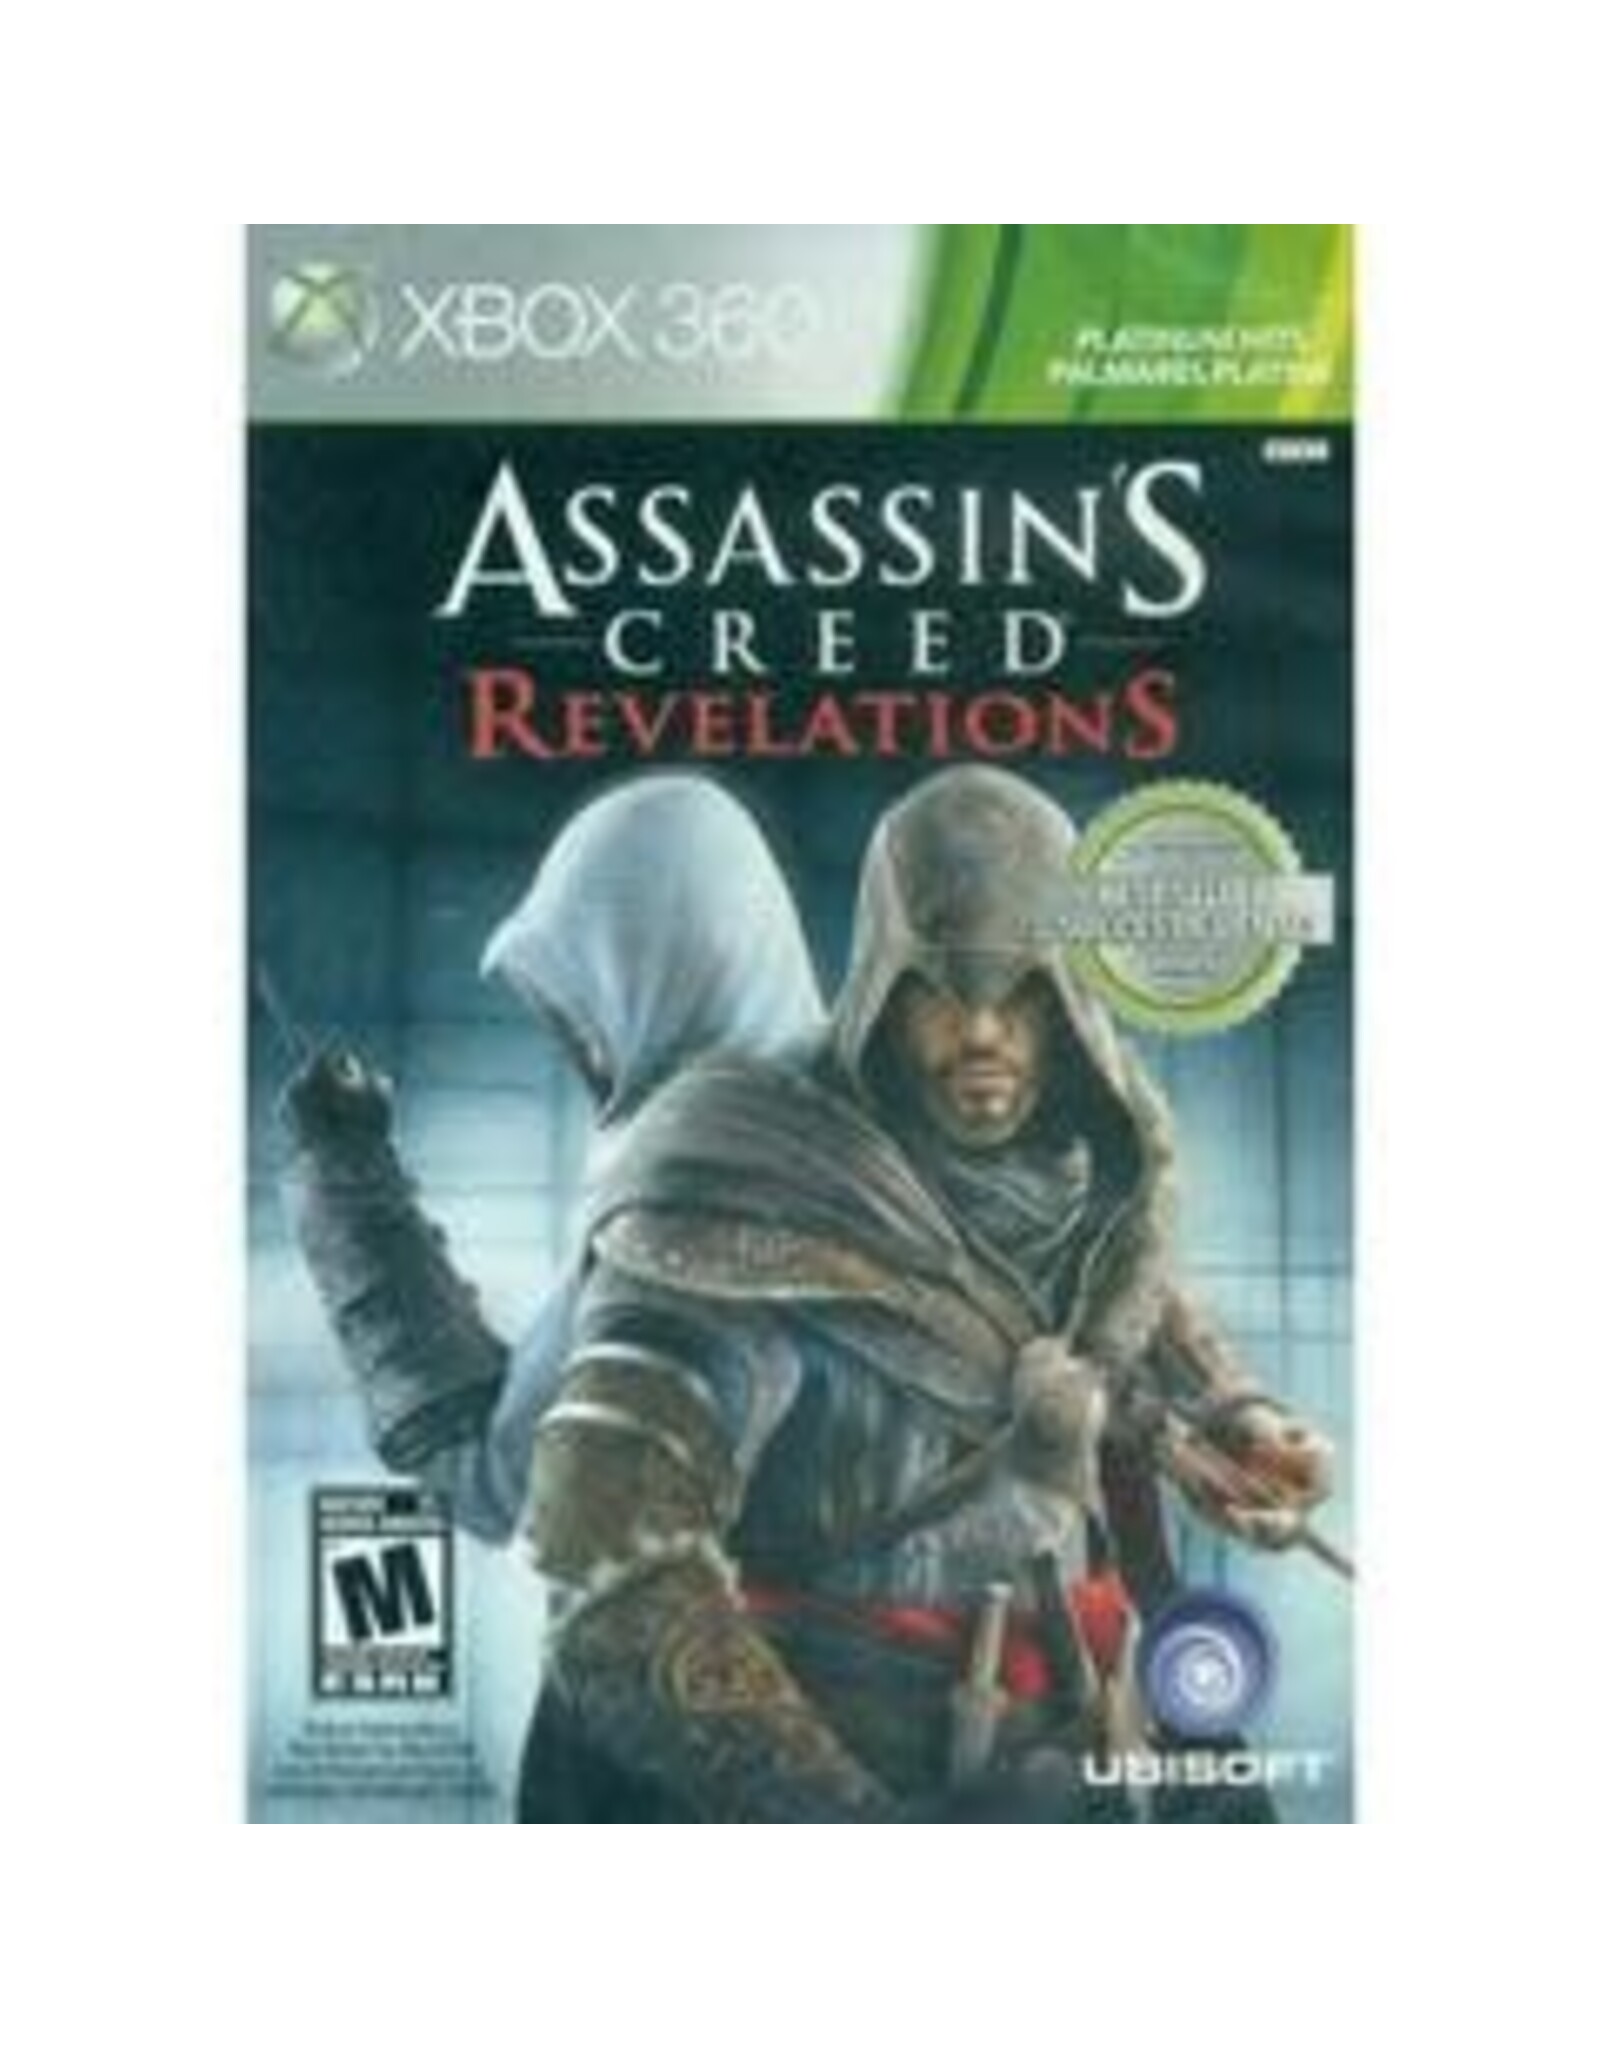 Xbox 360 Assassin's Creed Revelations (Platinum Hits, CiB)